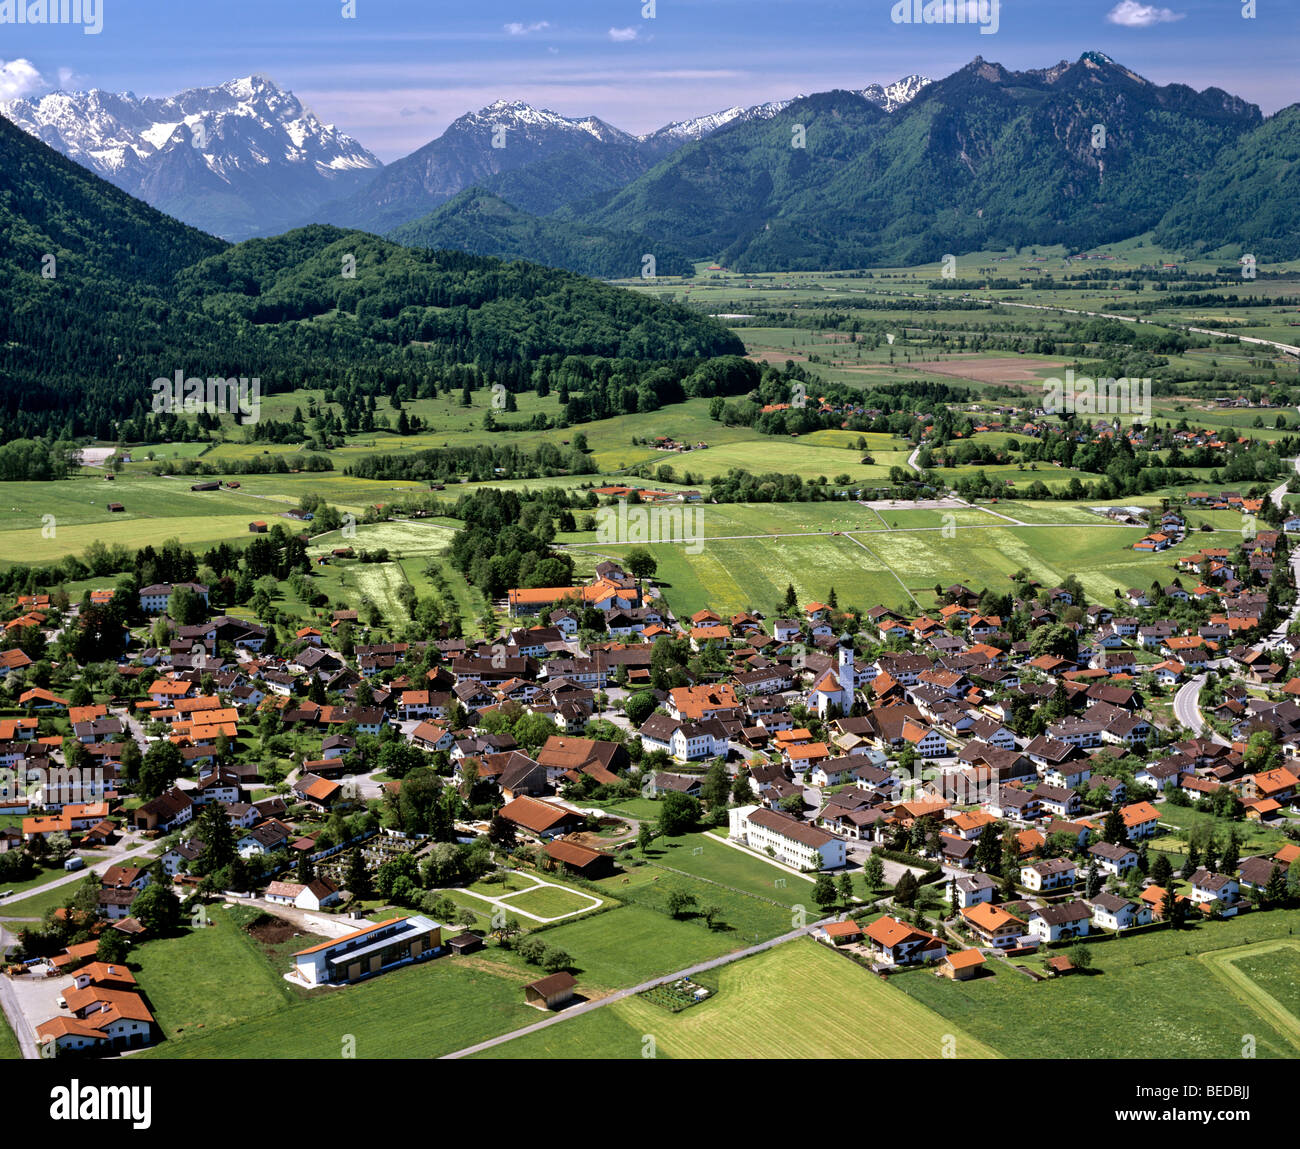 Fotografía aérea, Ohlstadt, Valle Loisachtal Werdenfelser Land, Werdenfels, rango de Wetterstein, Alpes Ammergau, Alta Baviera, Ge Foto de stock